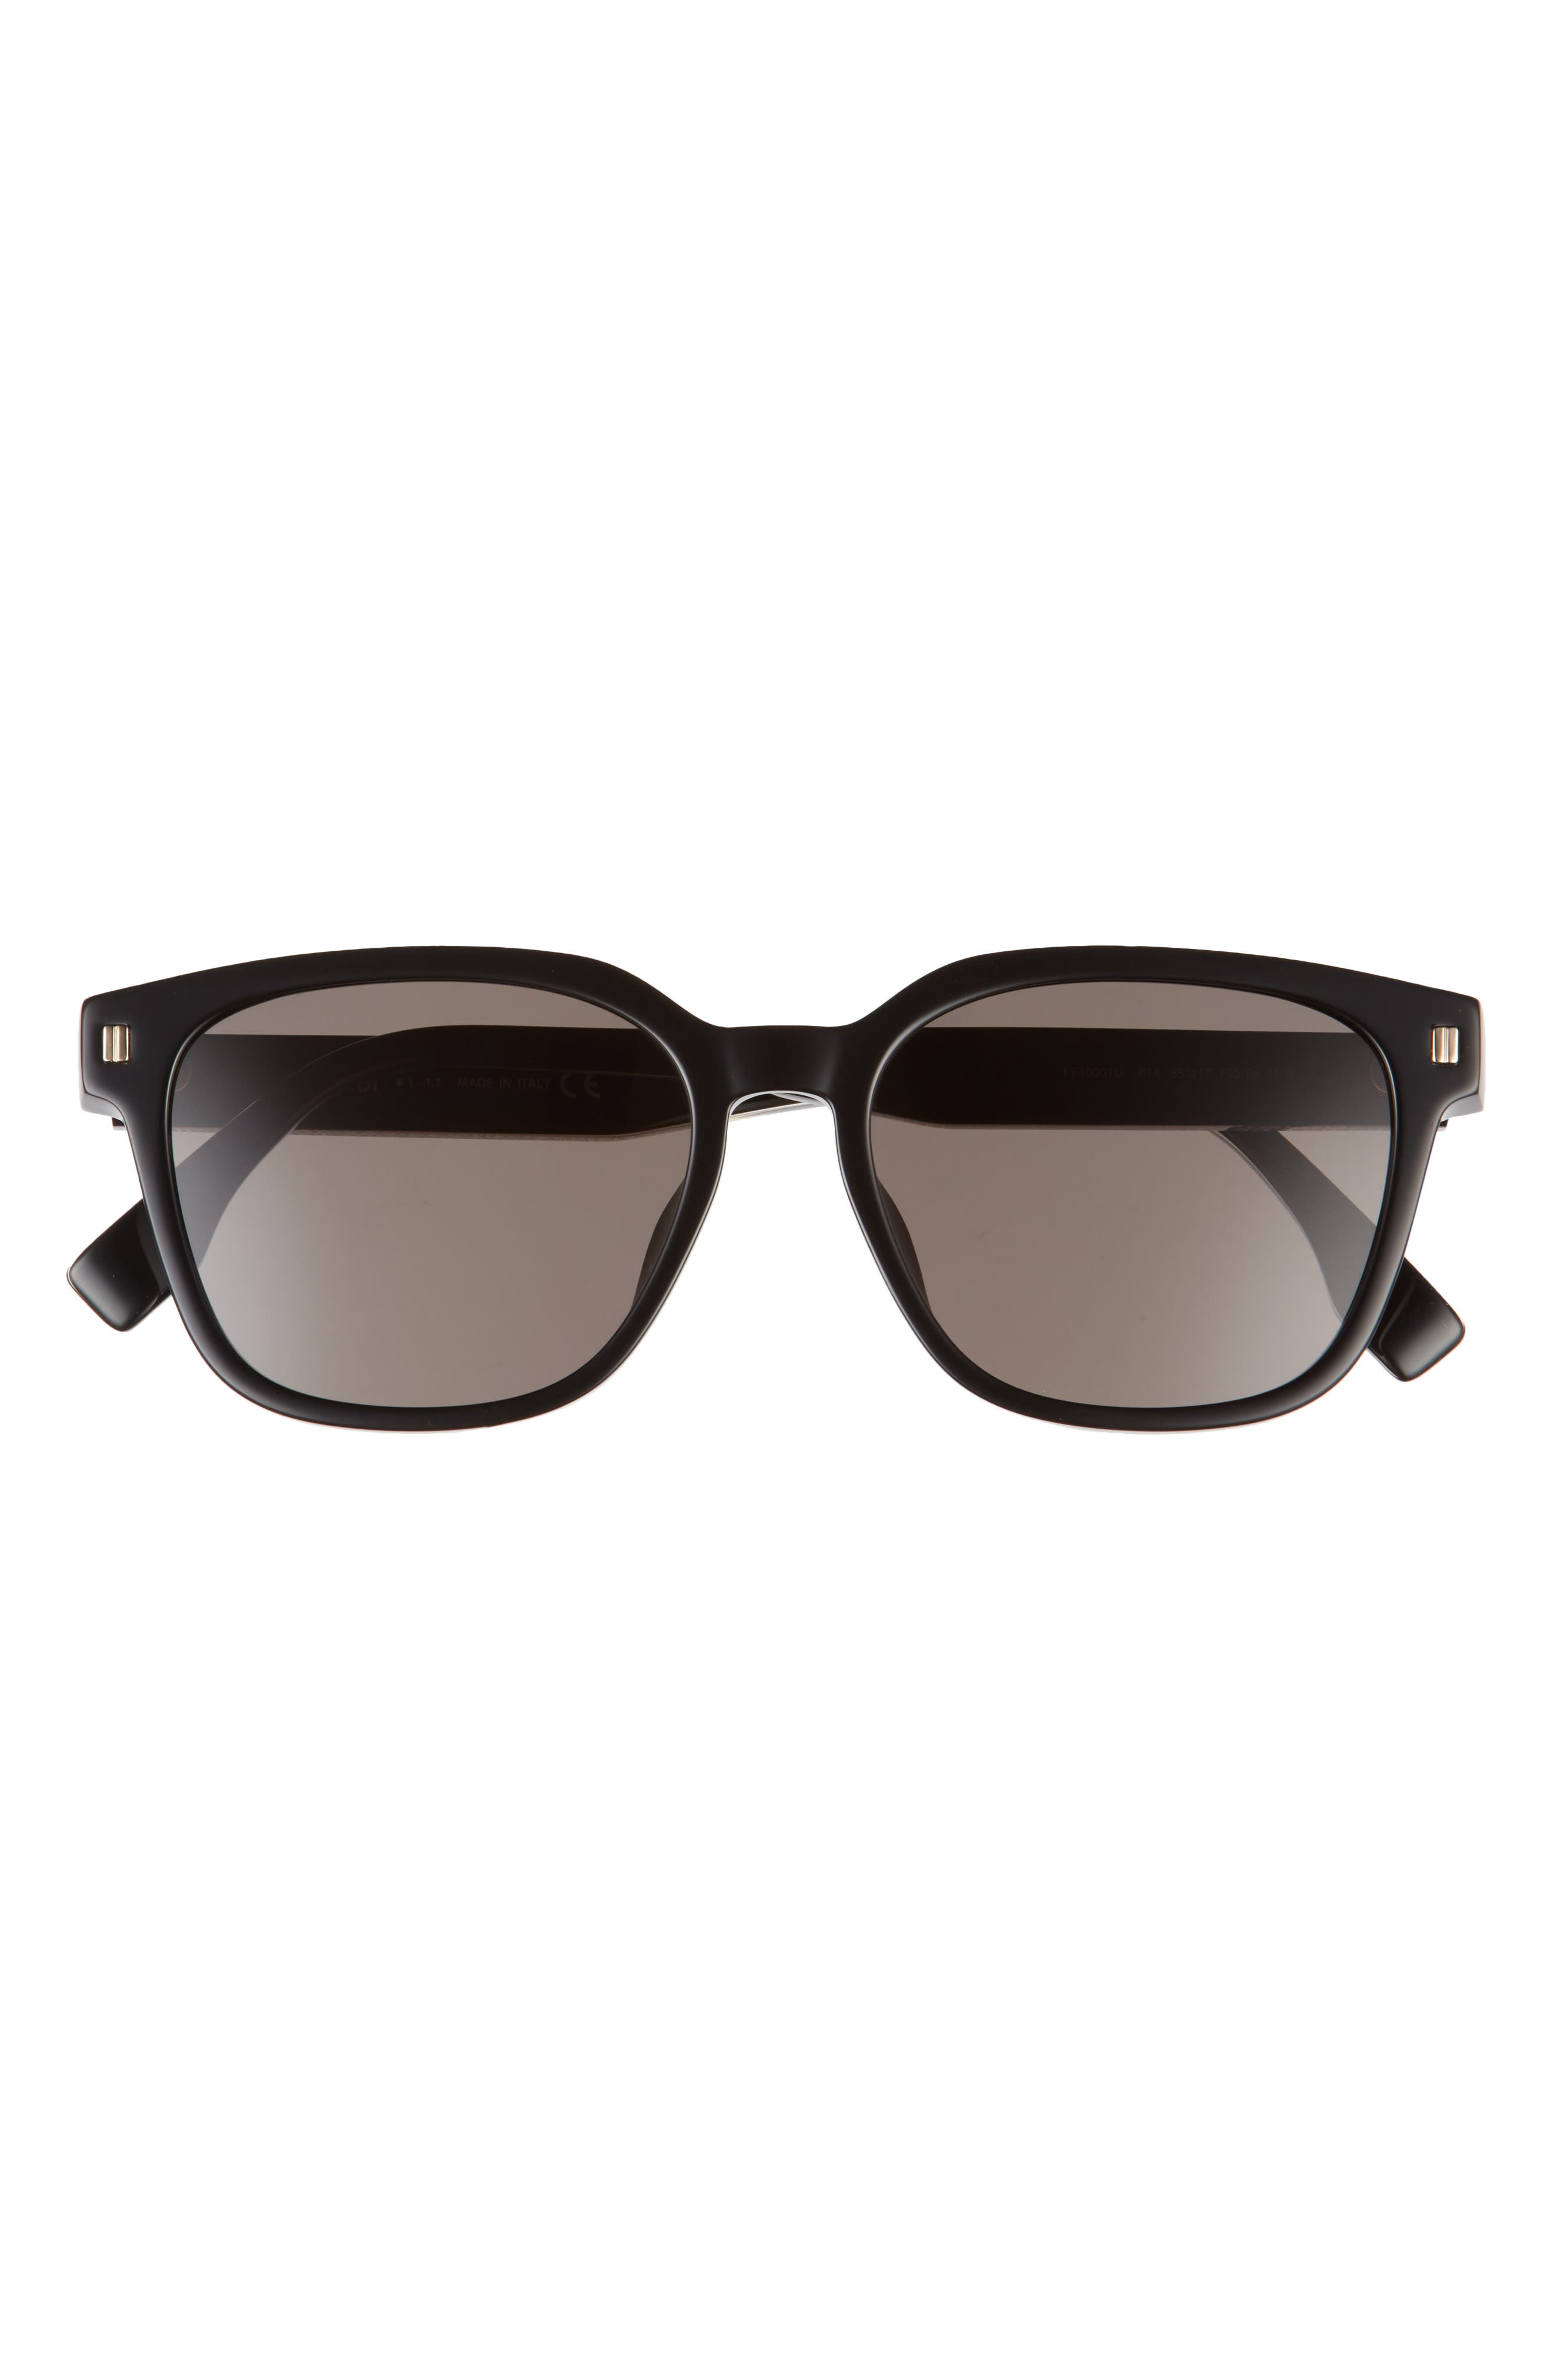 Fendi 55mm Square Sunglasses in Shiny Black /Smoke at Nordstrom